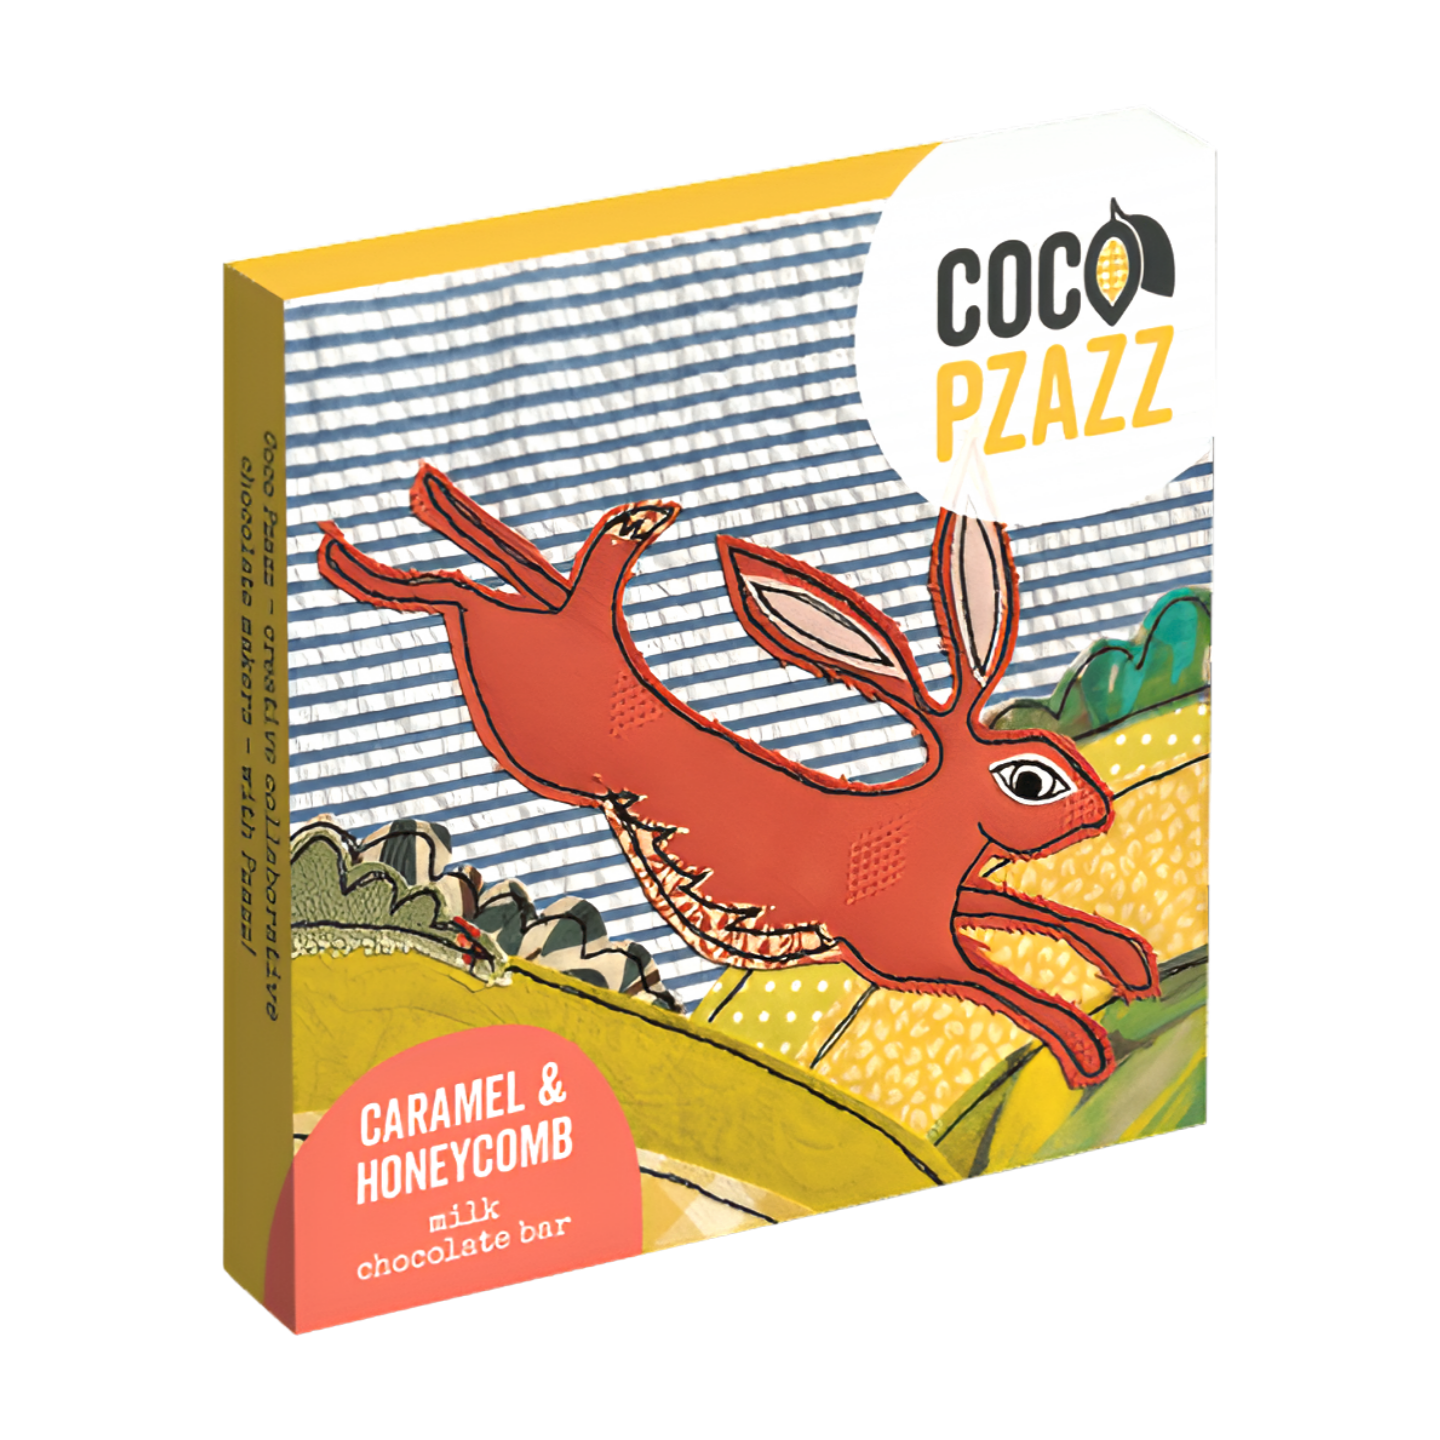 Coco Pzazz "March Hare " Caramel & Honeycomb Chocolate Bar (12x80g)